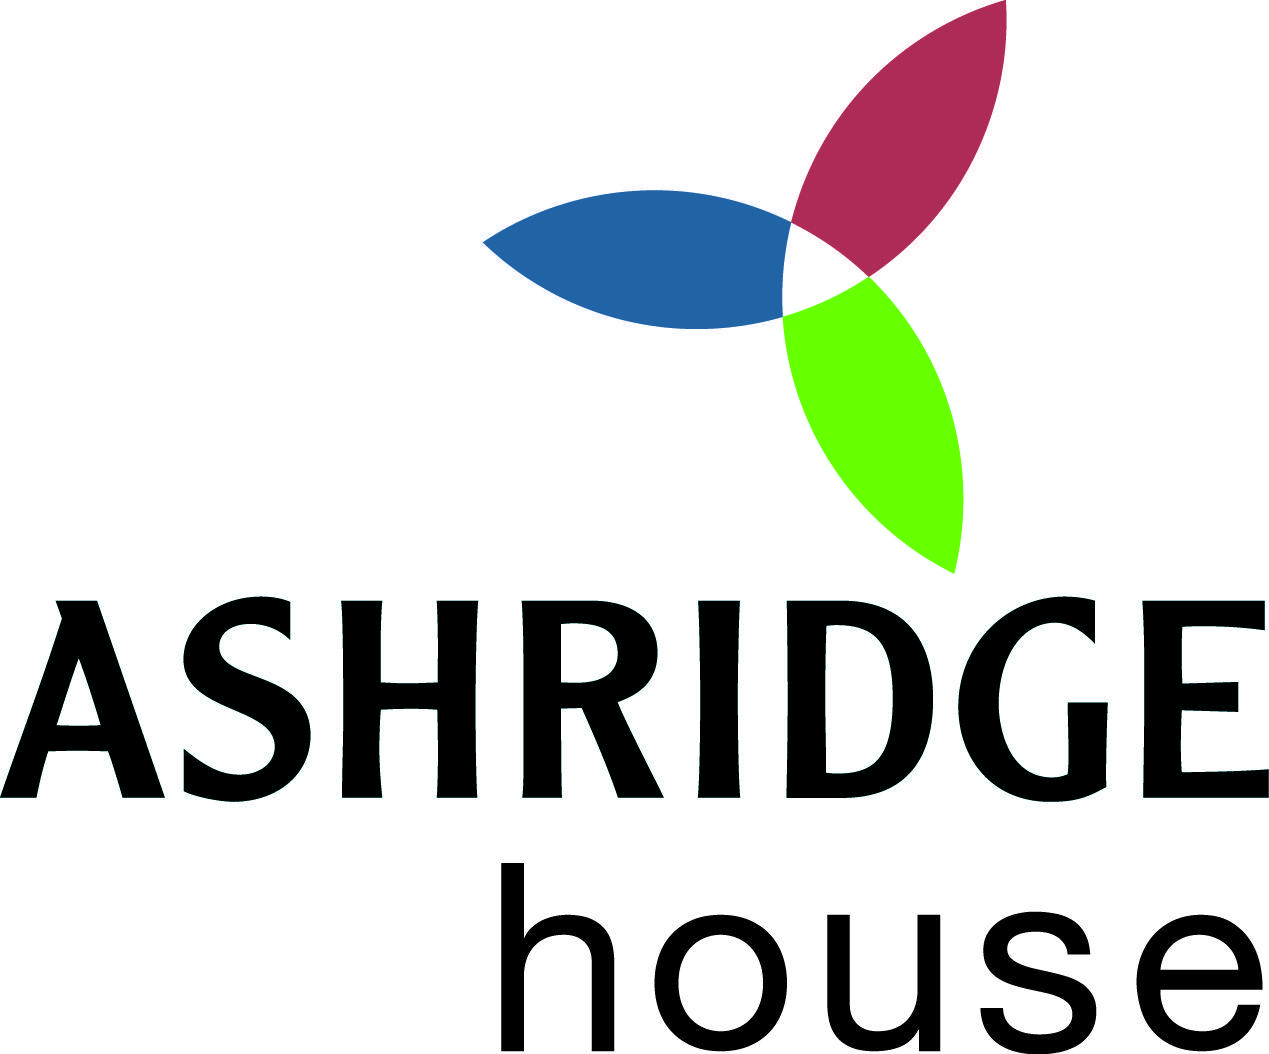 Century House Logo - The 21st Century House, a project by Ashridge (Bonar Law Memorial ...